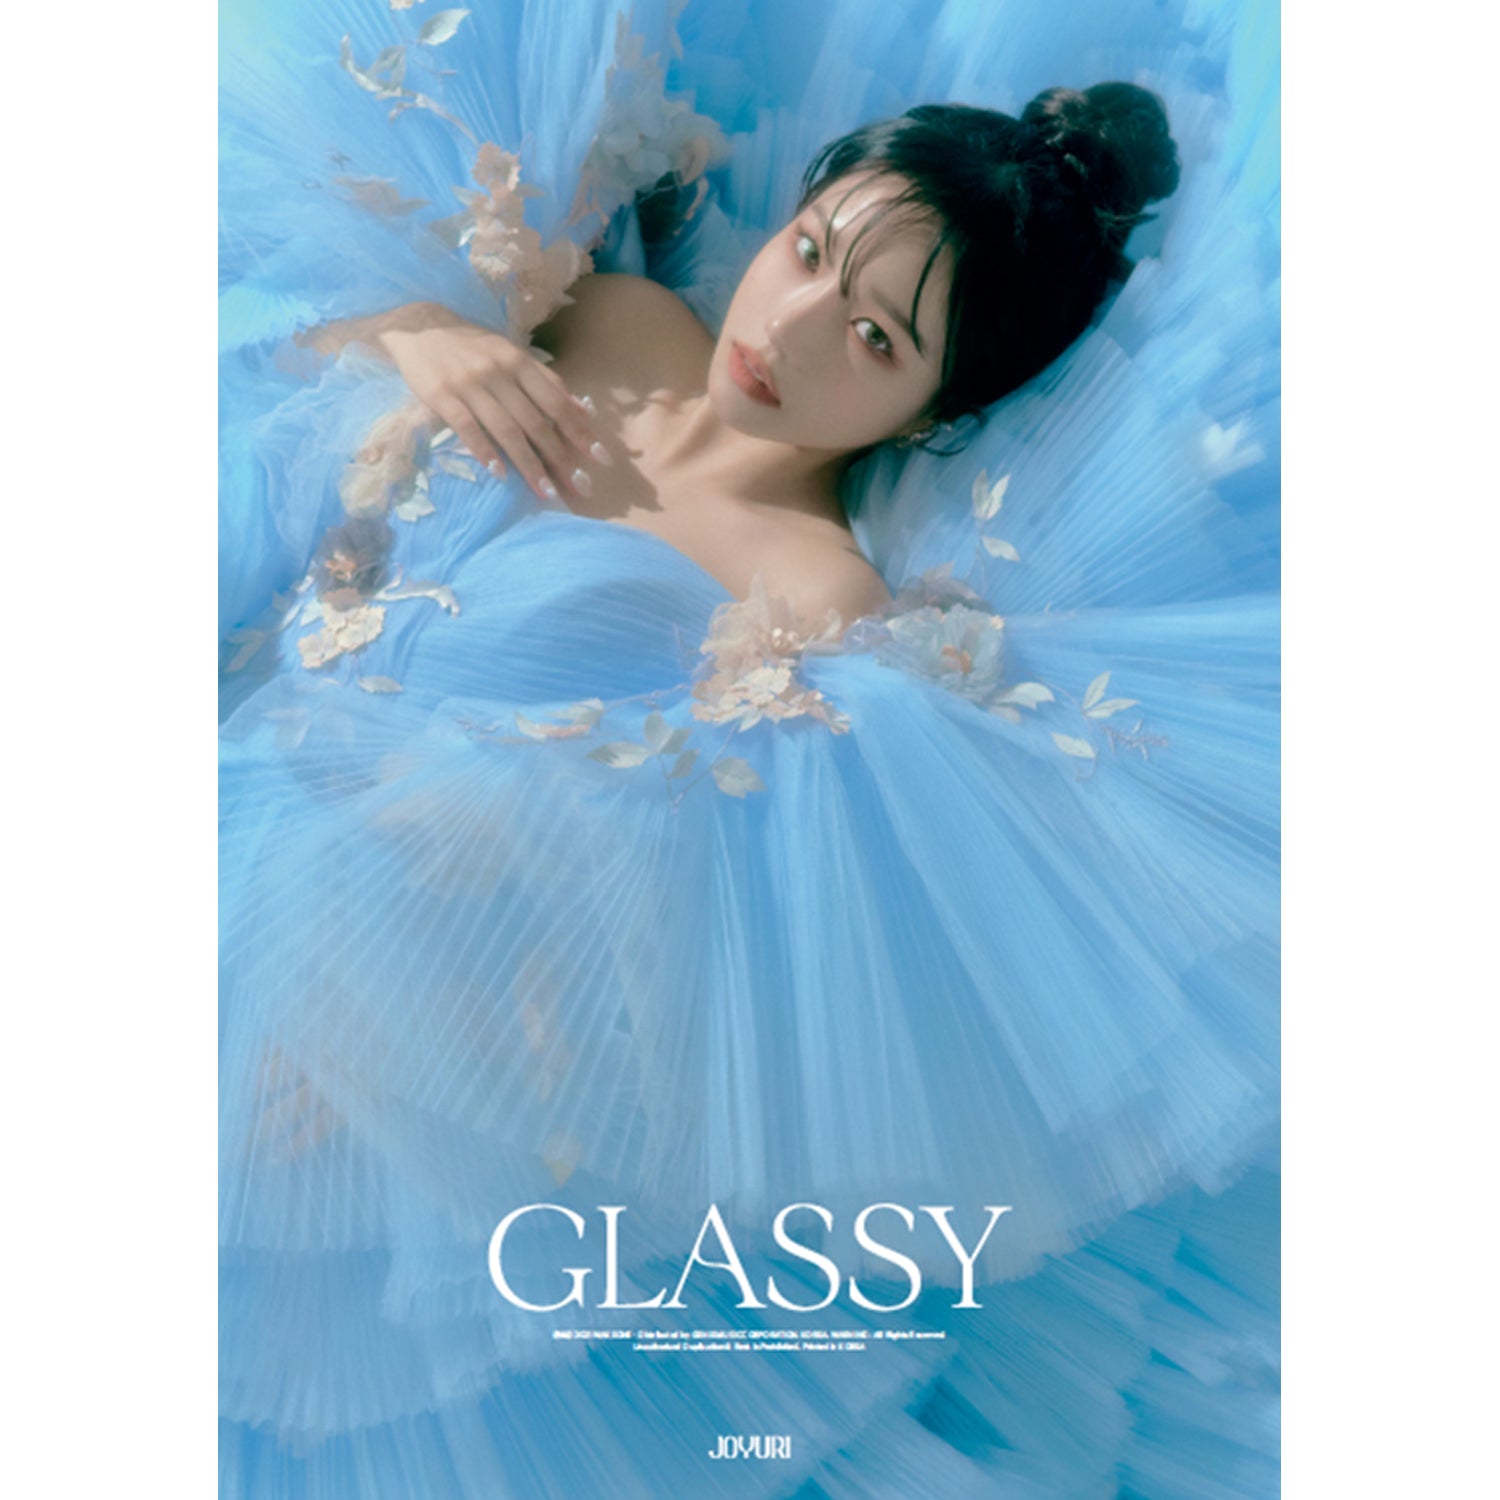 Jo Yuri Iz One 1st Single Album Glassy Poster Only Kpop Republic